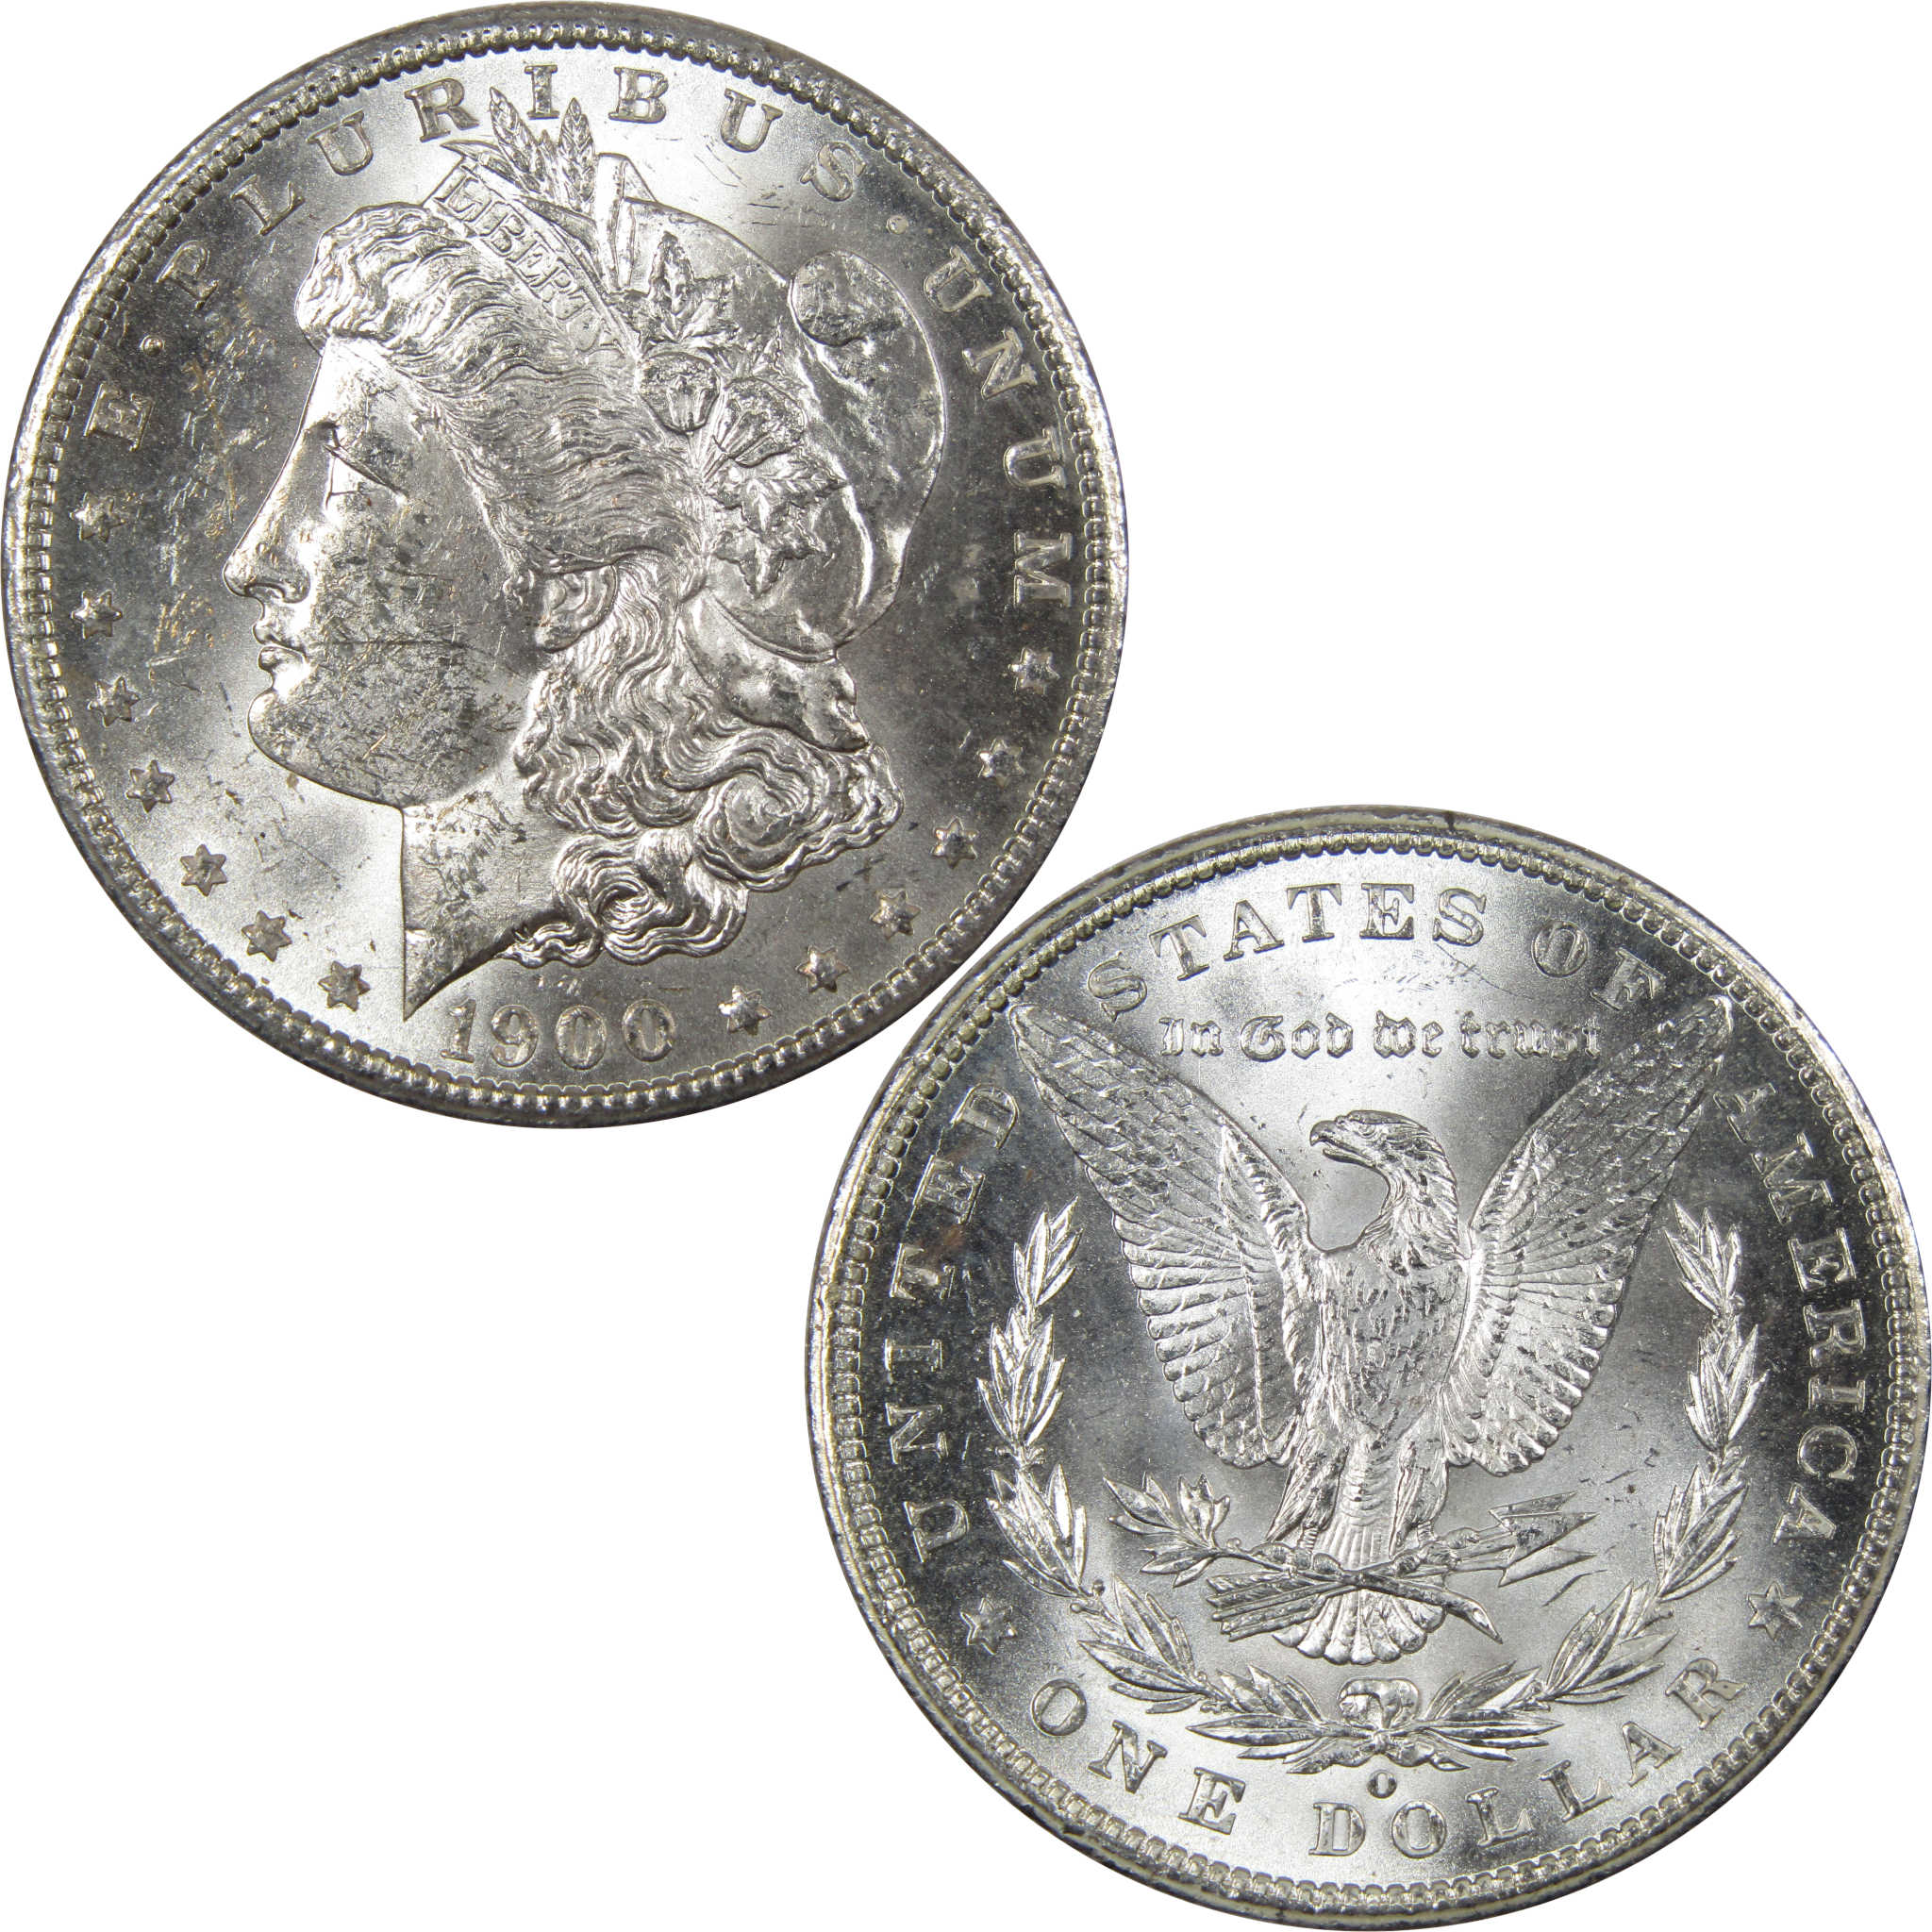 1900 O Morgan Dollar BU Uncirculated Mint State 90% Silver SKU:IPC9798 - Morgan coin - Morgan silver dollar - Morgan silver dollar for sale - Profile Coins &amp; Collectibles